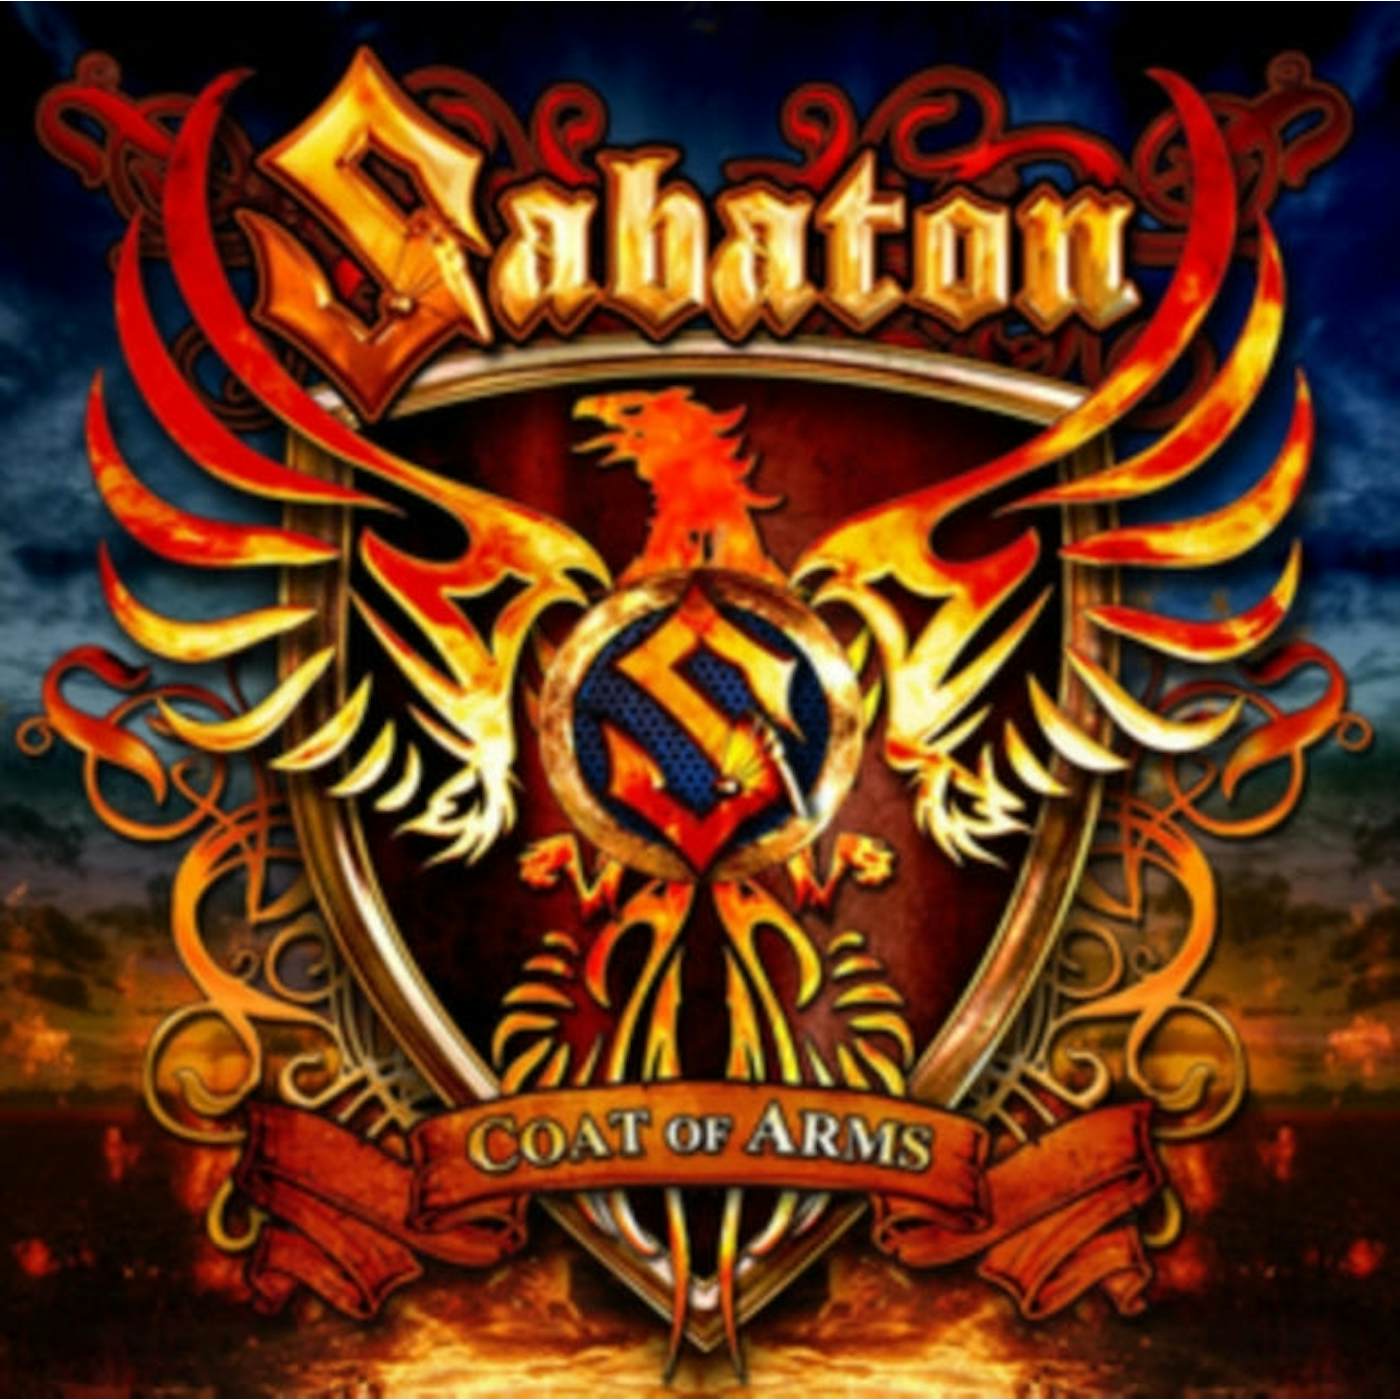 Sabaton LP Vinyl Record - Coat Of Arms